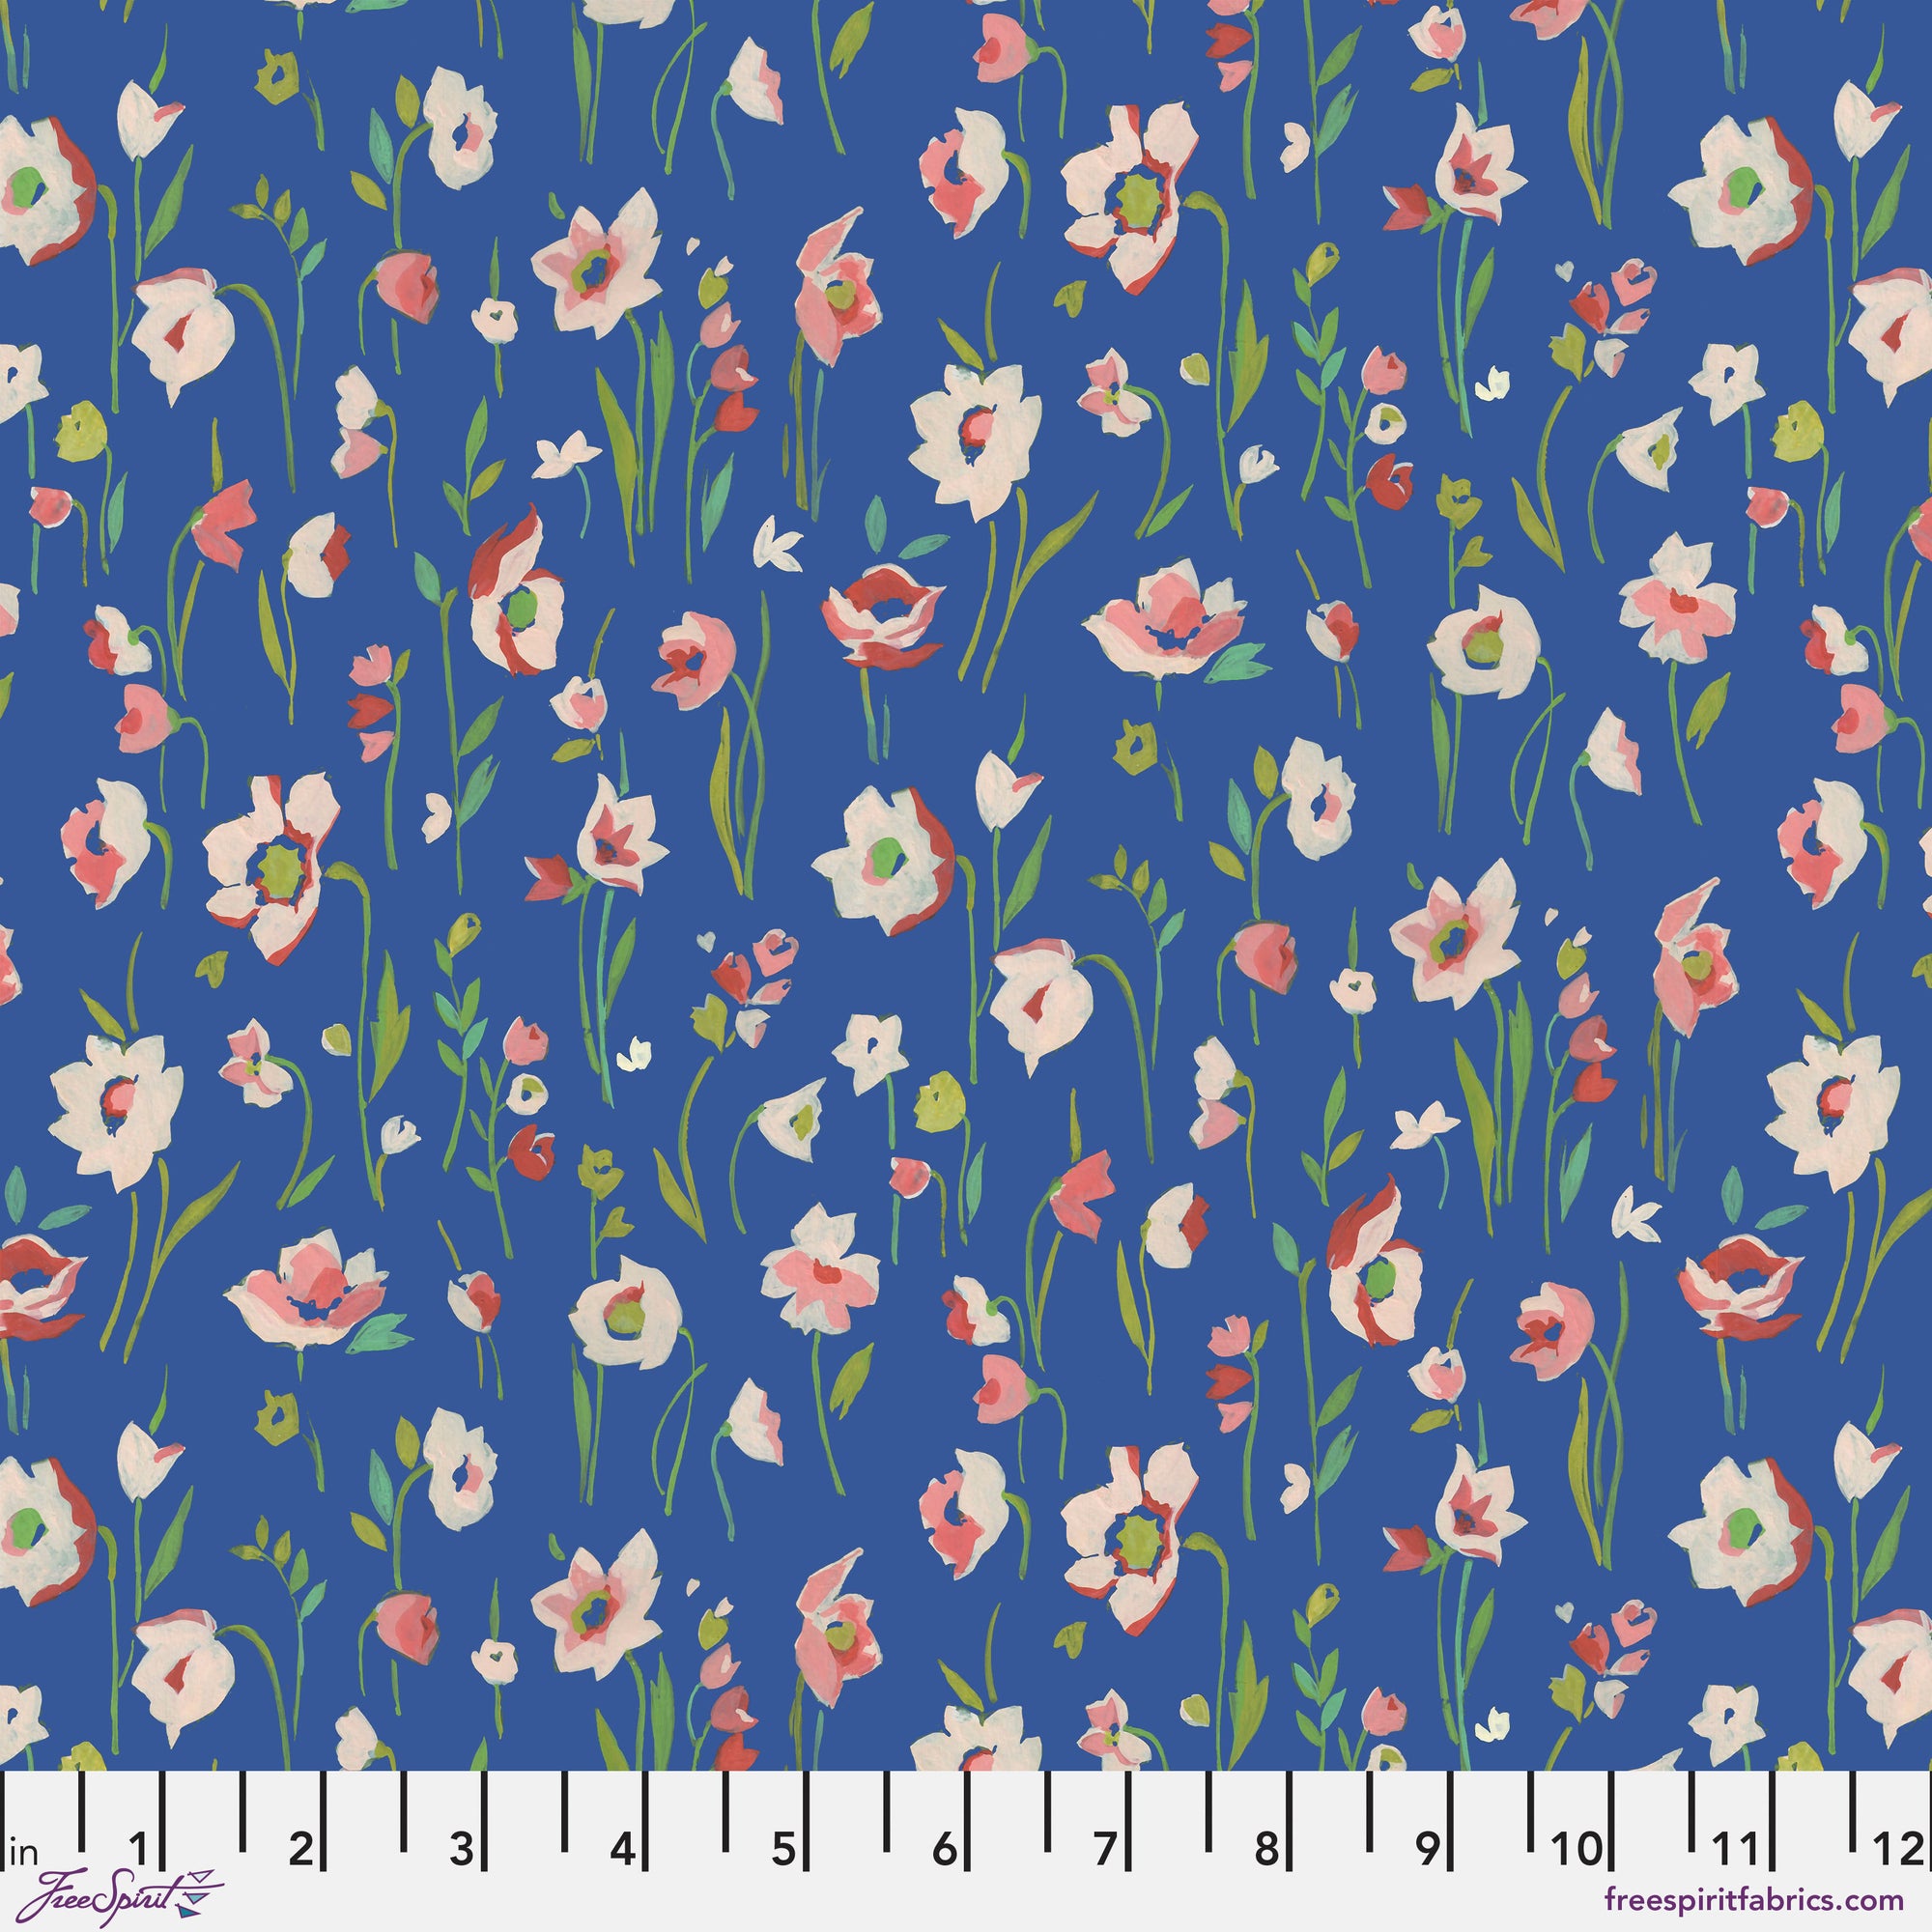 SALE Floret C675 Cream Riley Blake Designs Flowers Floral Tone-on-tone  Quilting Cotton Fabric -  Canada